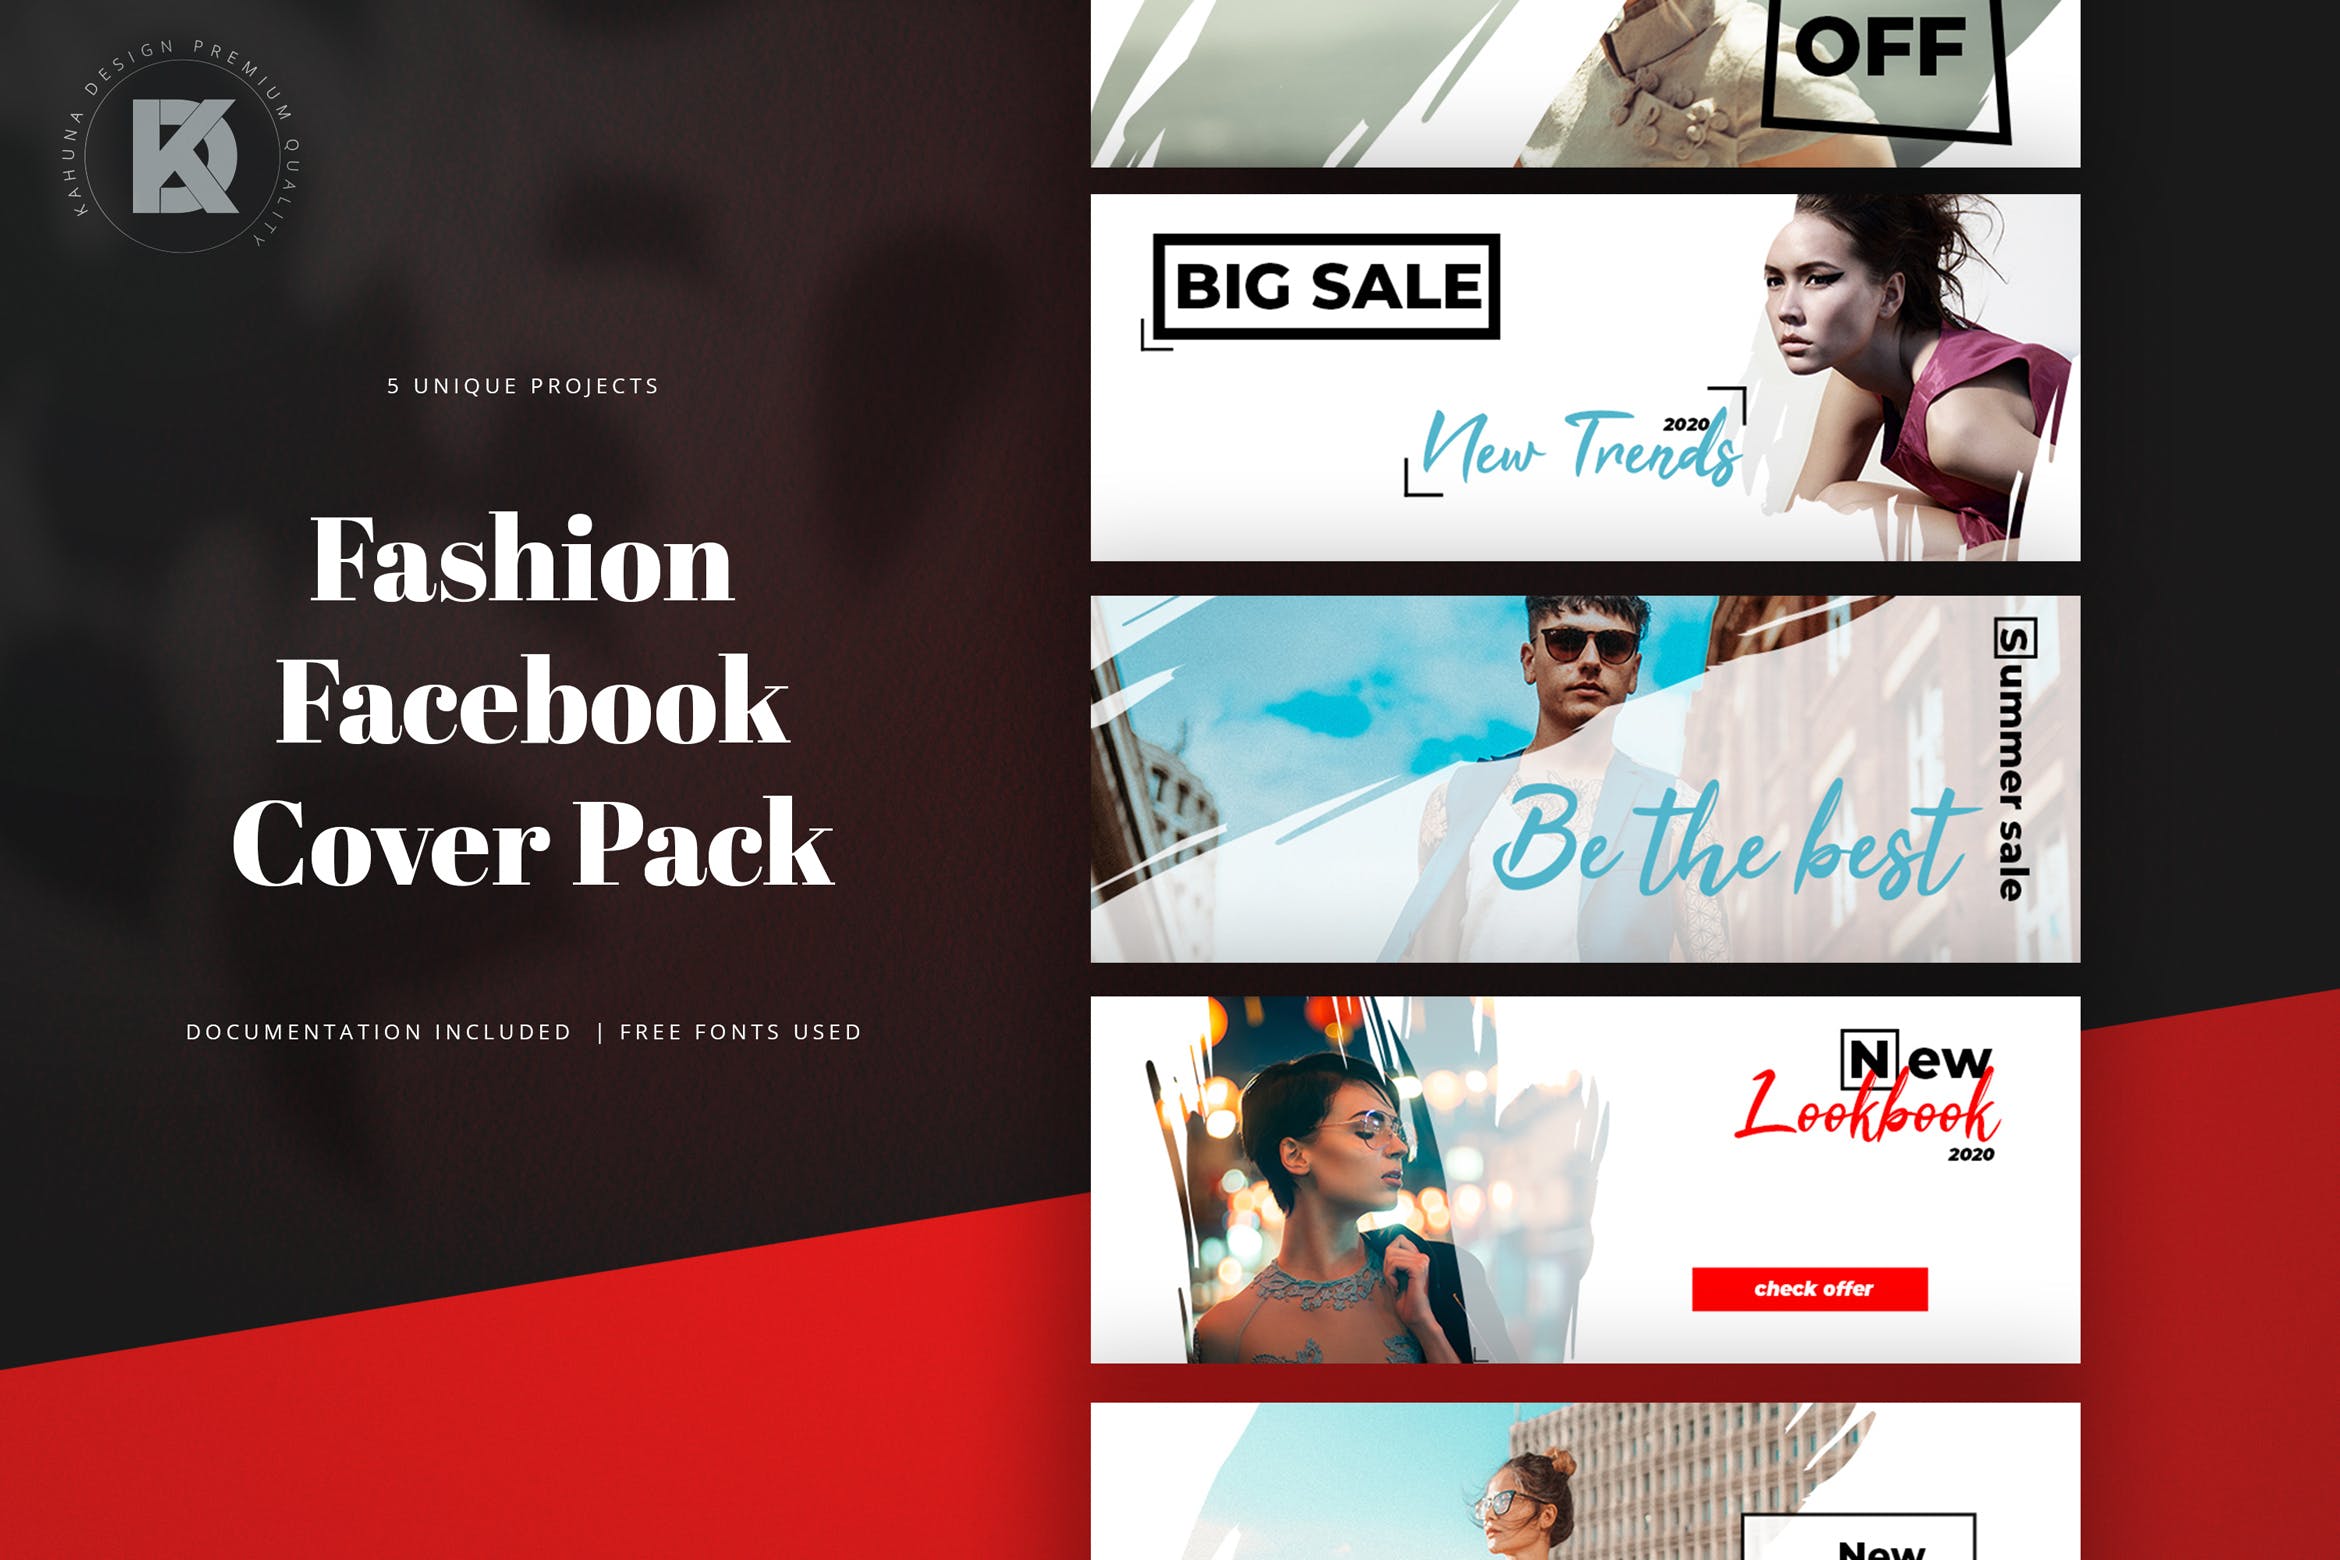 时尚品牌Facebook封面设计模板素材库精选 Fashion Facebook Cover Pack插图